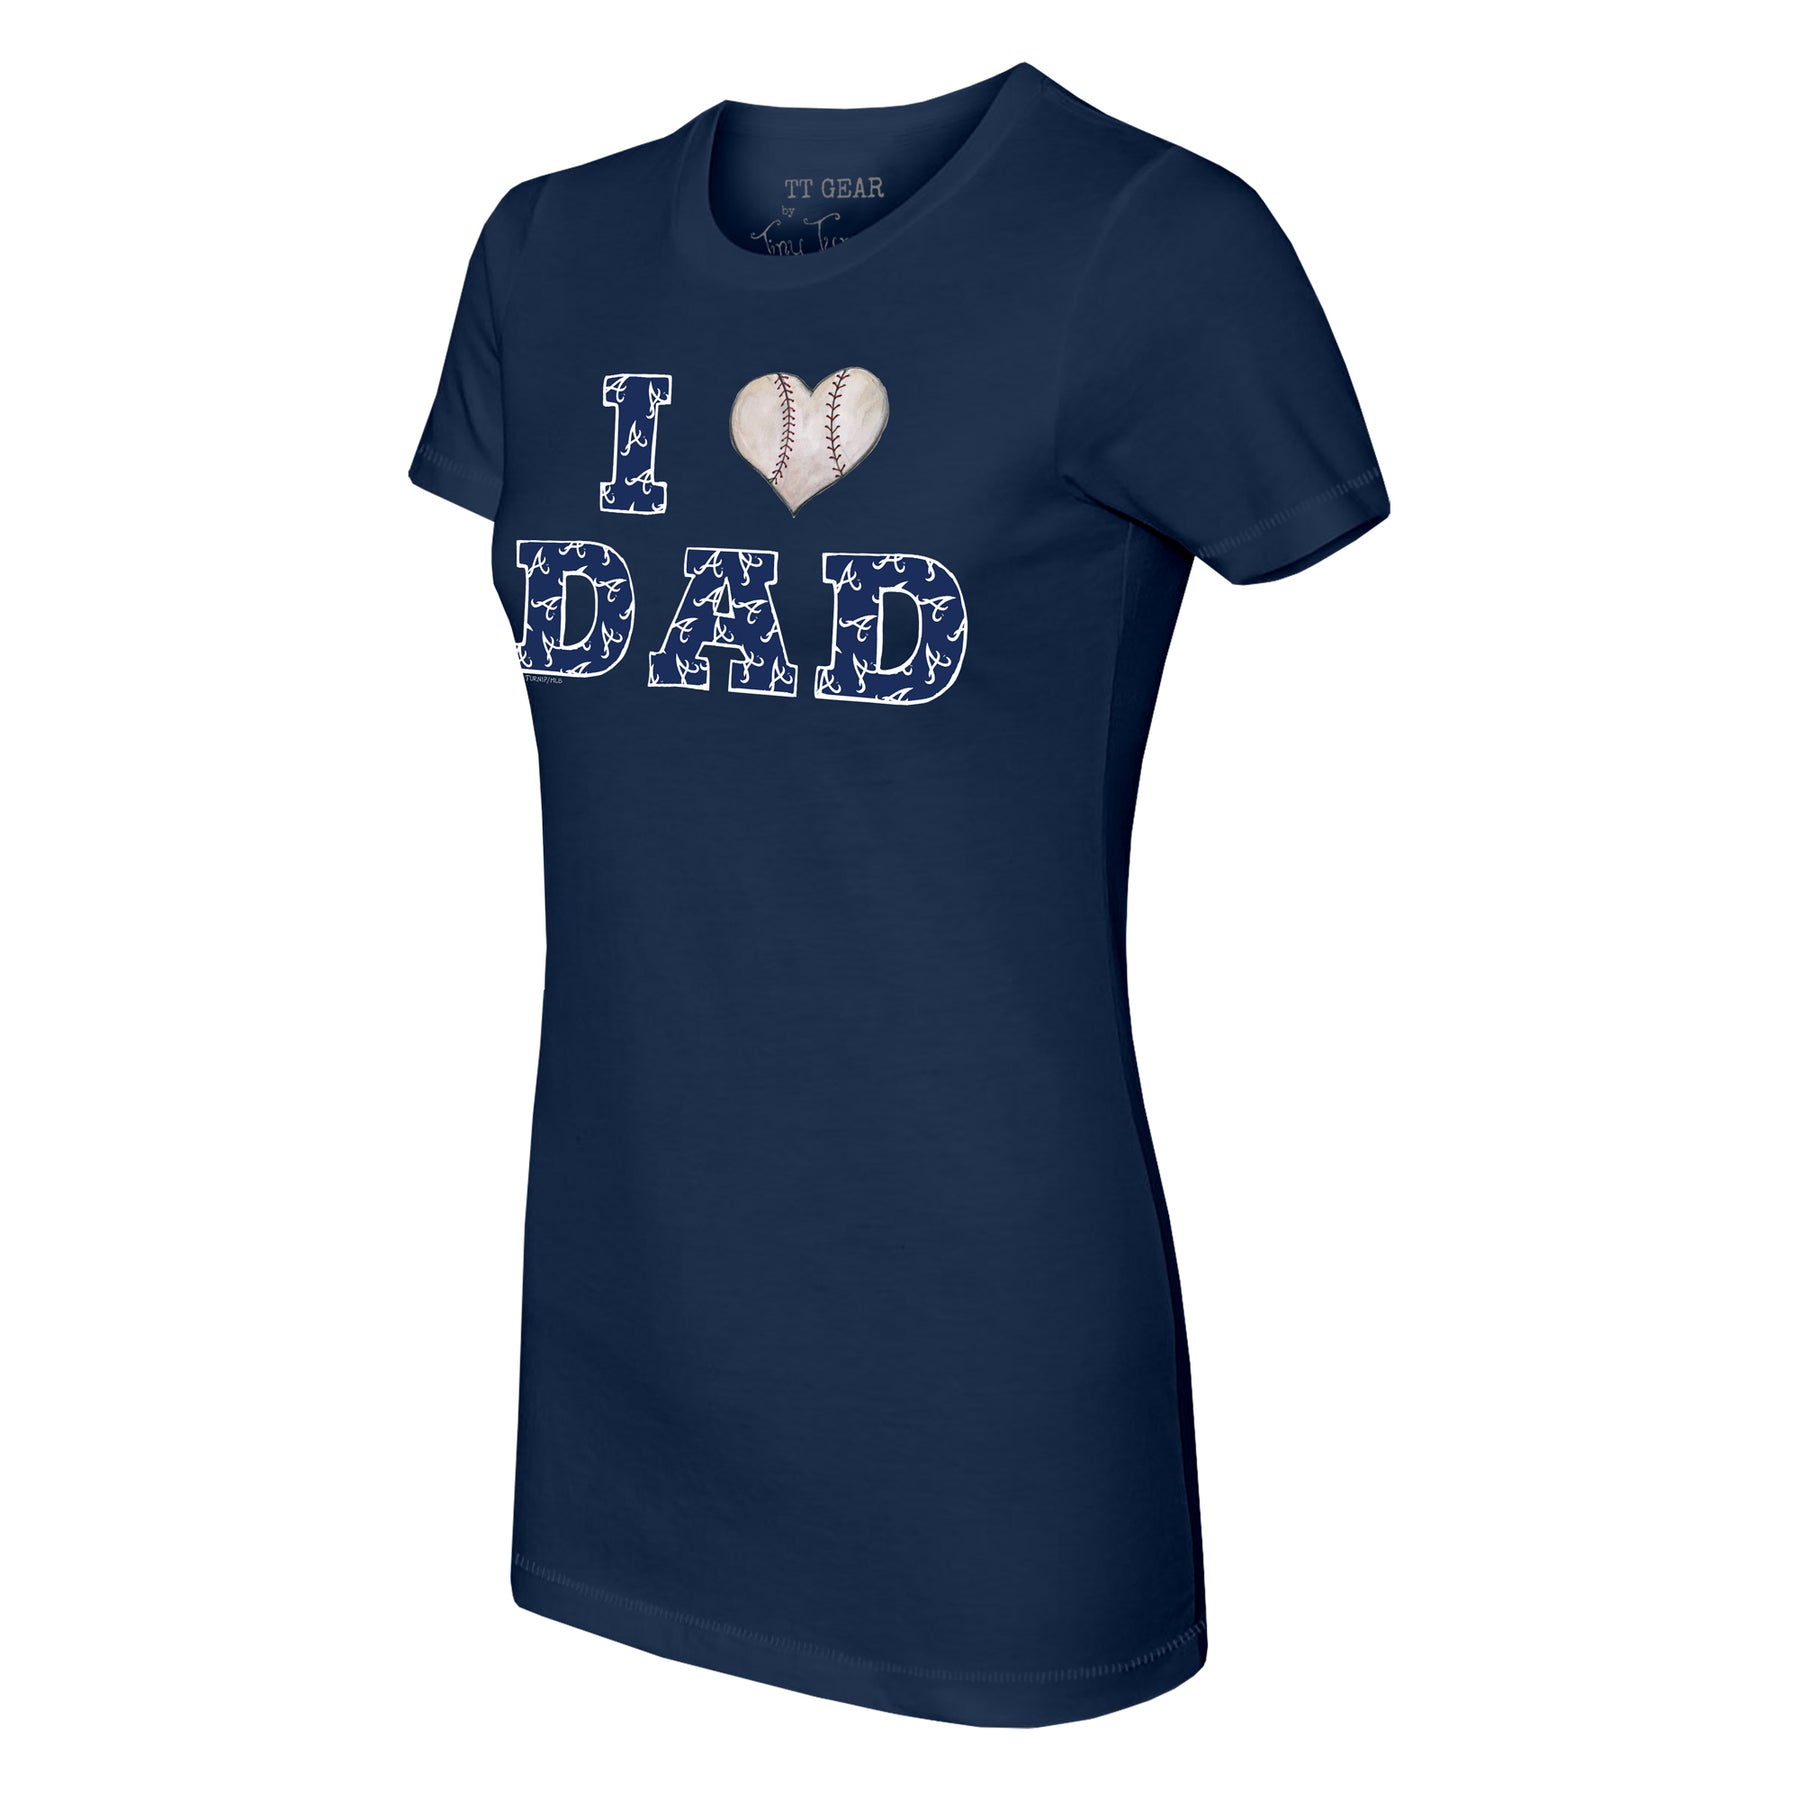 Girls Toddler Tiny Turnip Navy New York Yankees I Love Dad Fringe T-Shirt Size: 2T